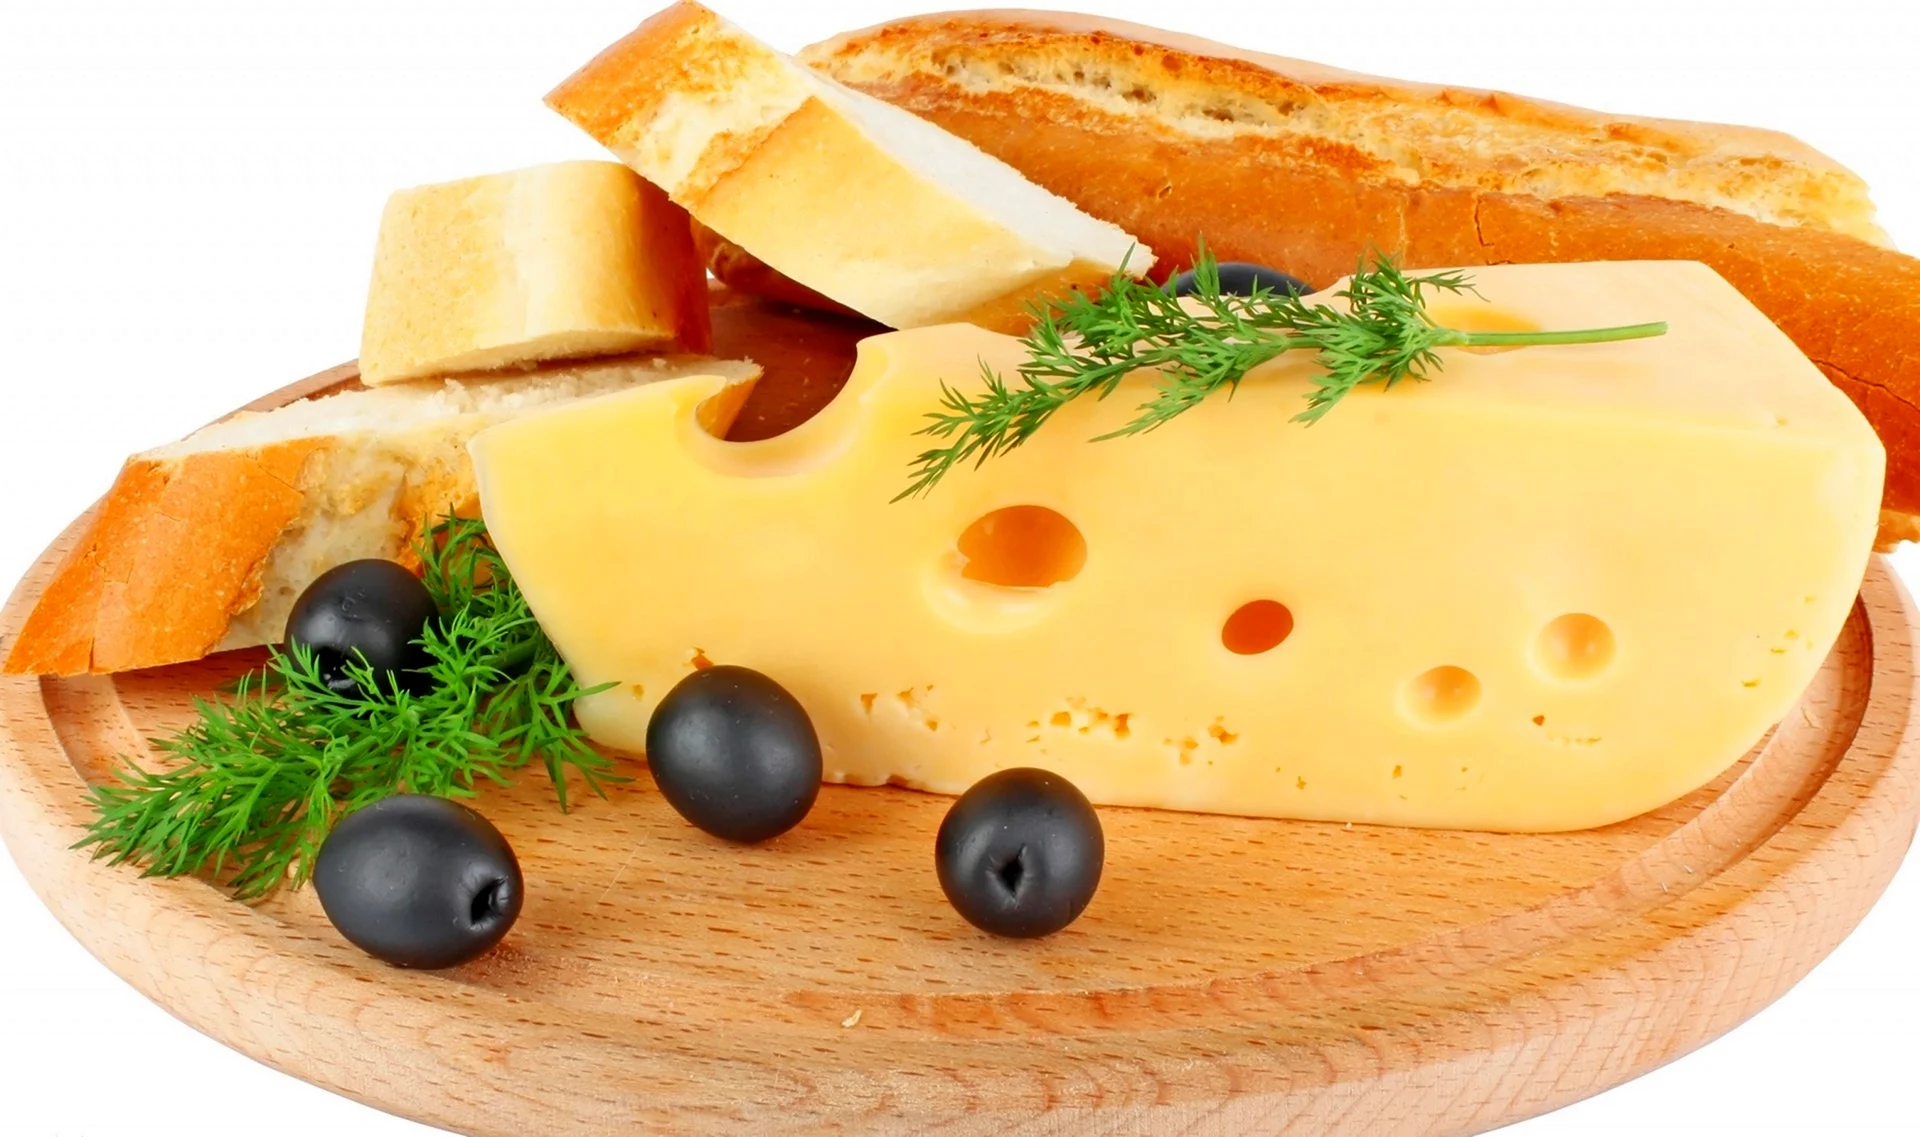 Сыр на белом фоне